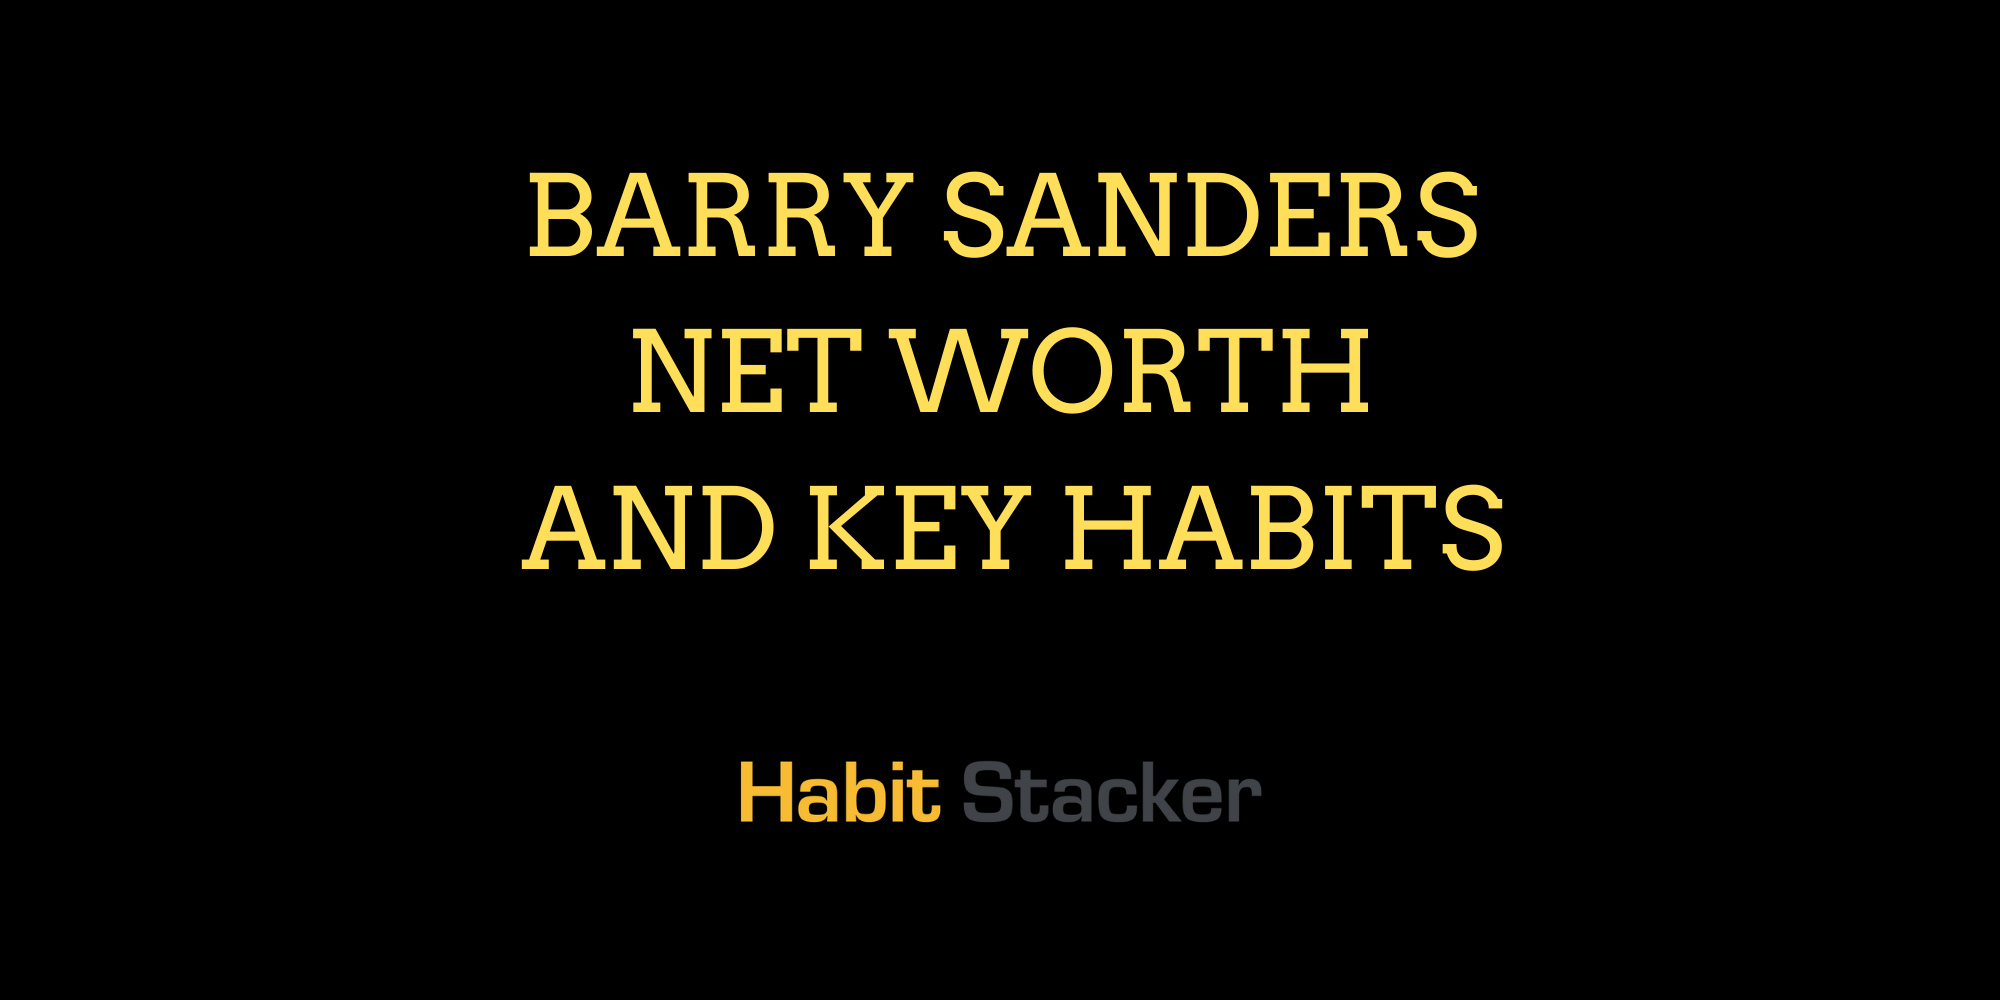 Barry Sanders Net Worth And Key Habits